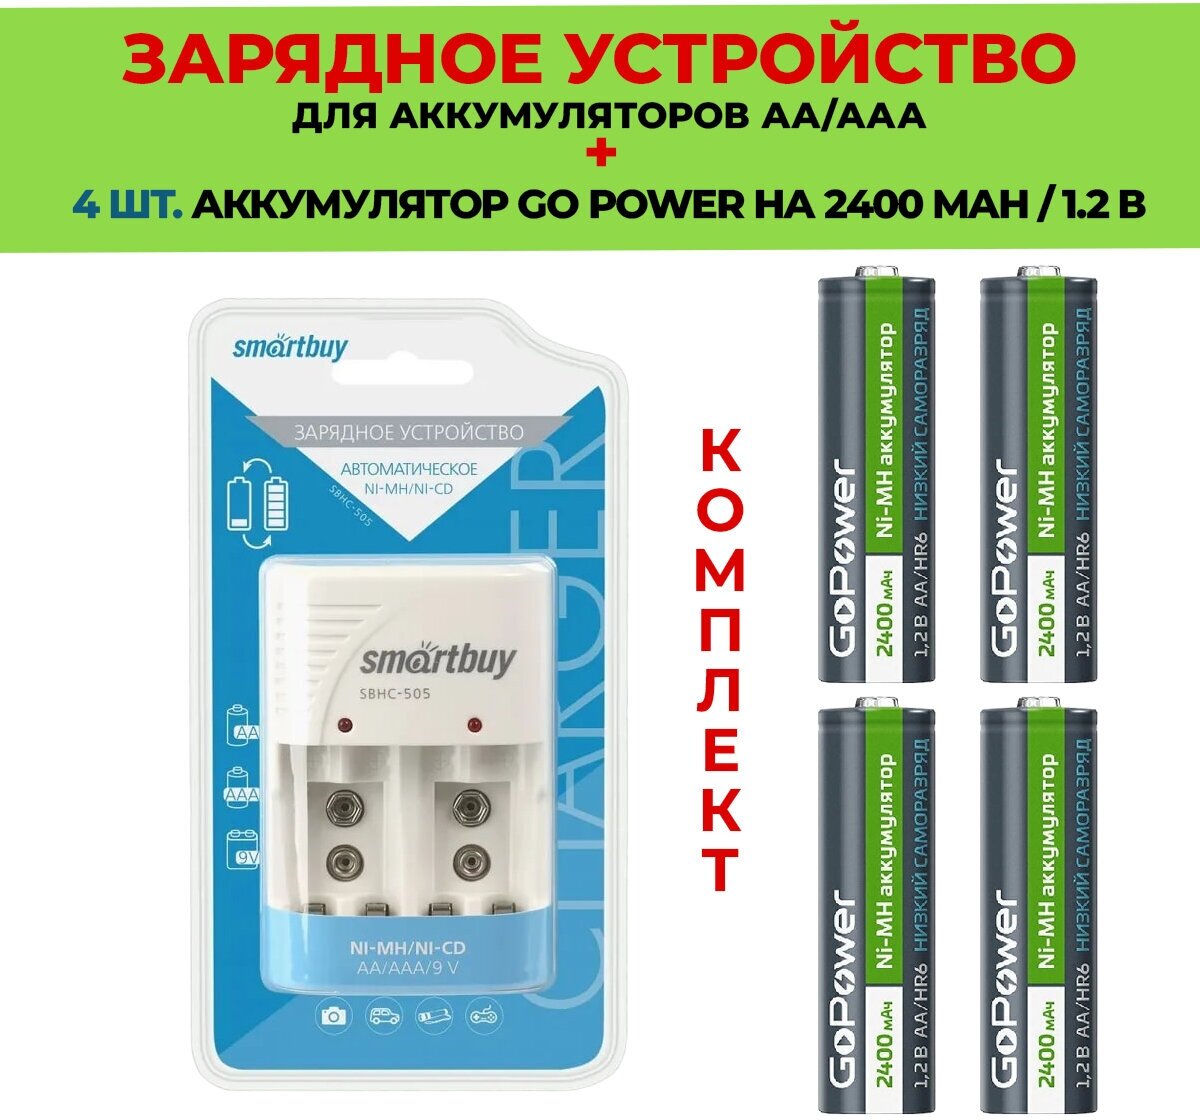 4 шт. аккумулятор на 2400 mAh+Зарядное устройство для аккумуляторов AАА/АА /Комплект SBHC-505 / Go Power 2400 mAh типа AA